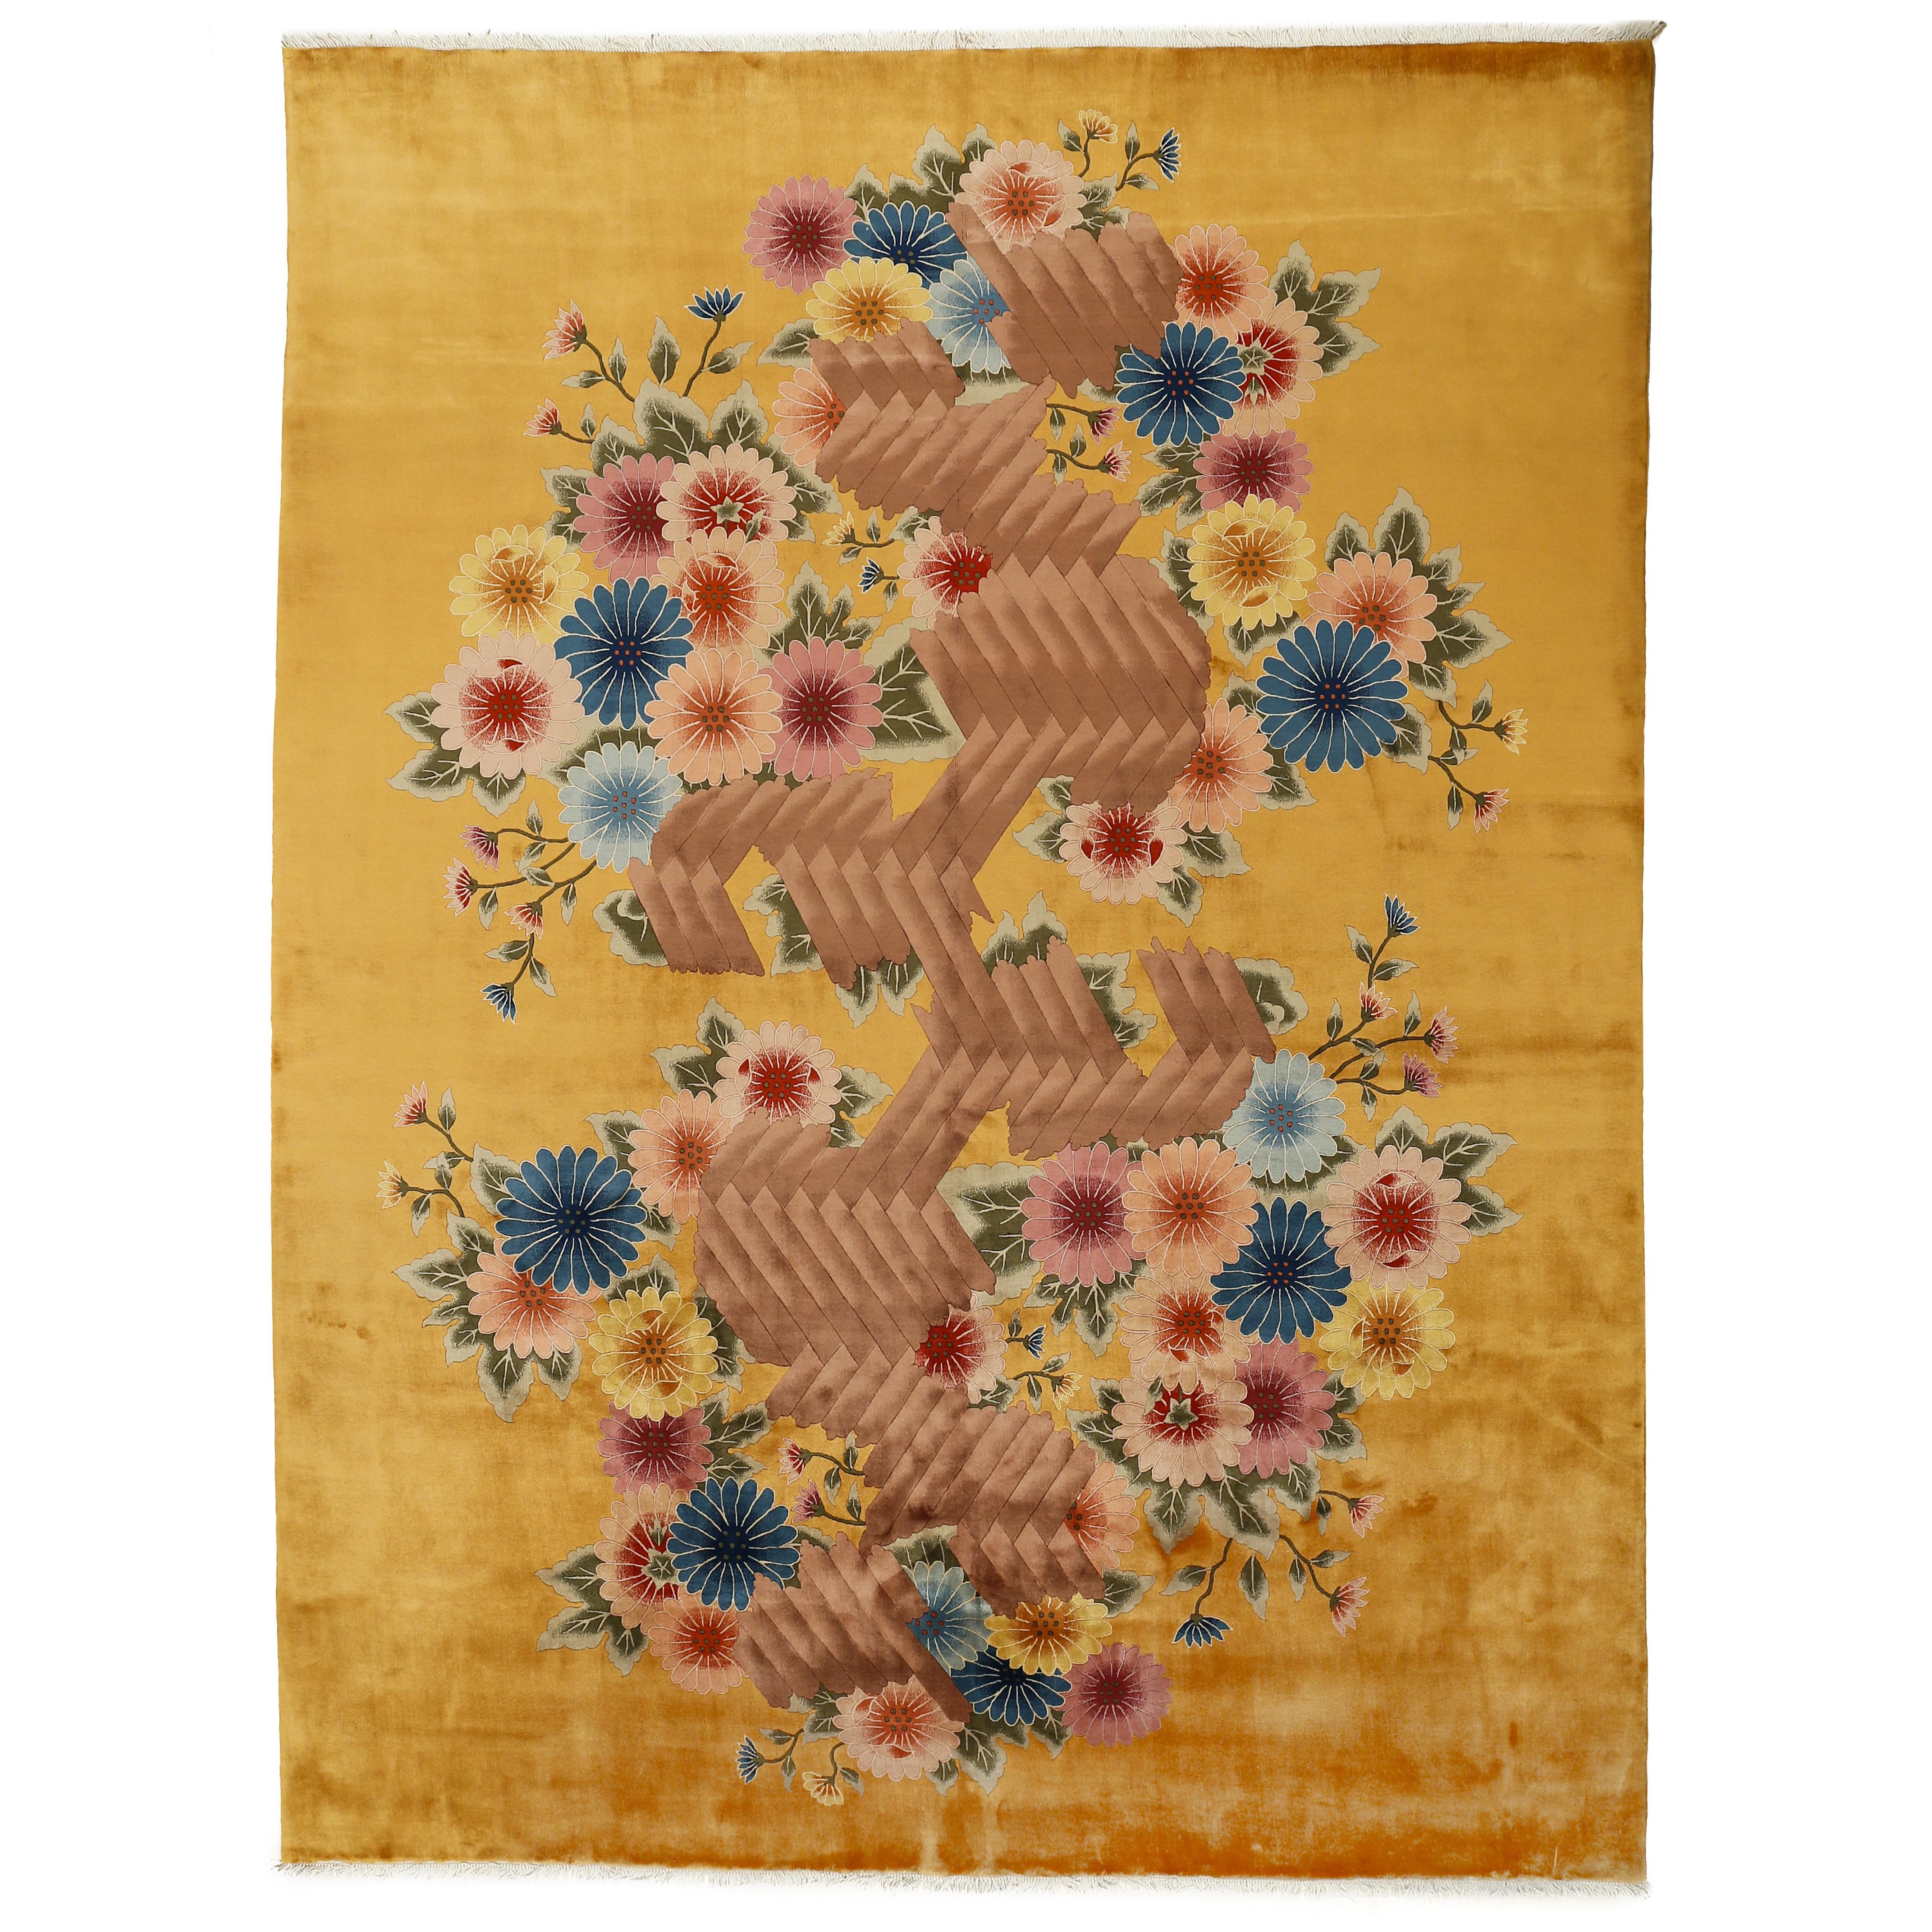 Antique Art Deco Chinese Carpet by Nichols & Co.